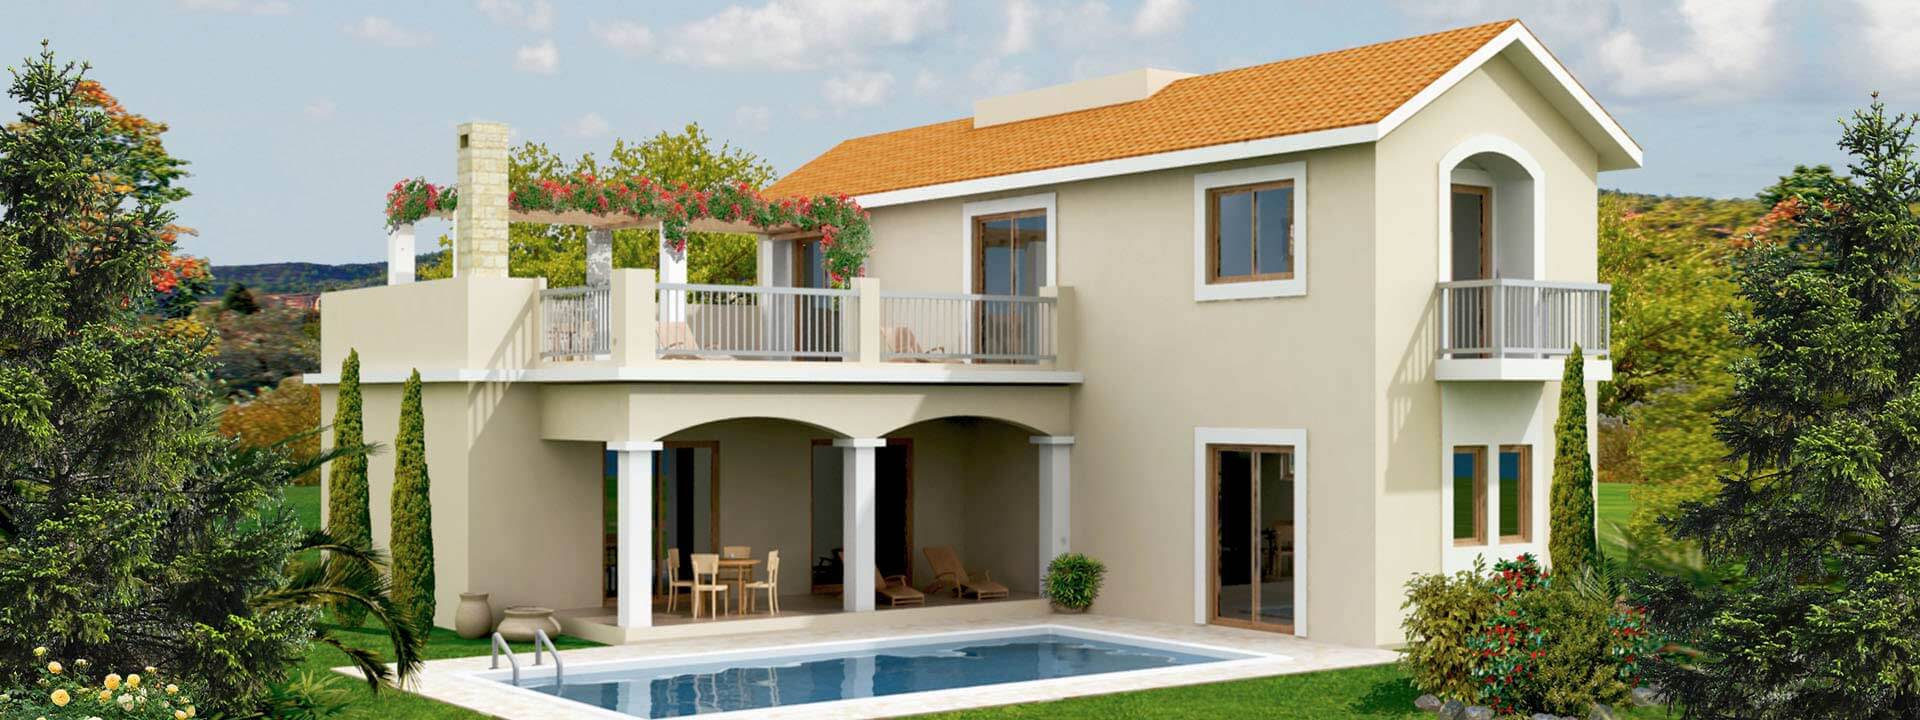 Limassol Monagroulli Hills 3 Bedroom Villa For Sale RSD0329